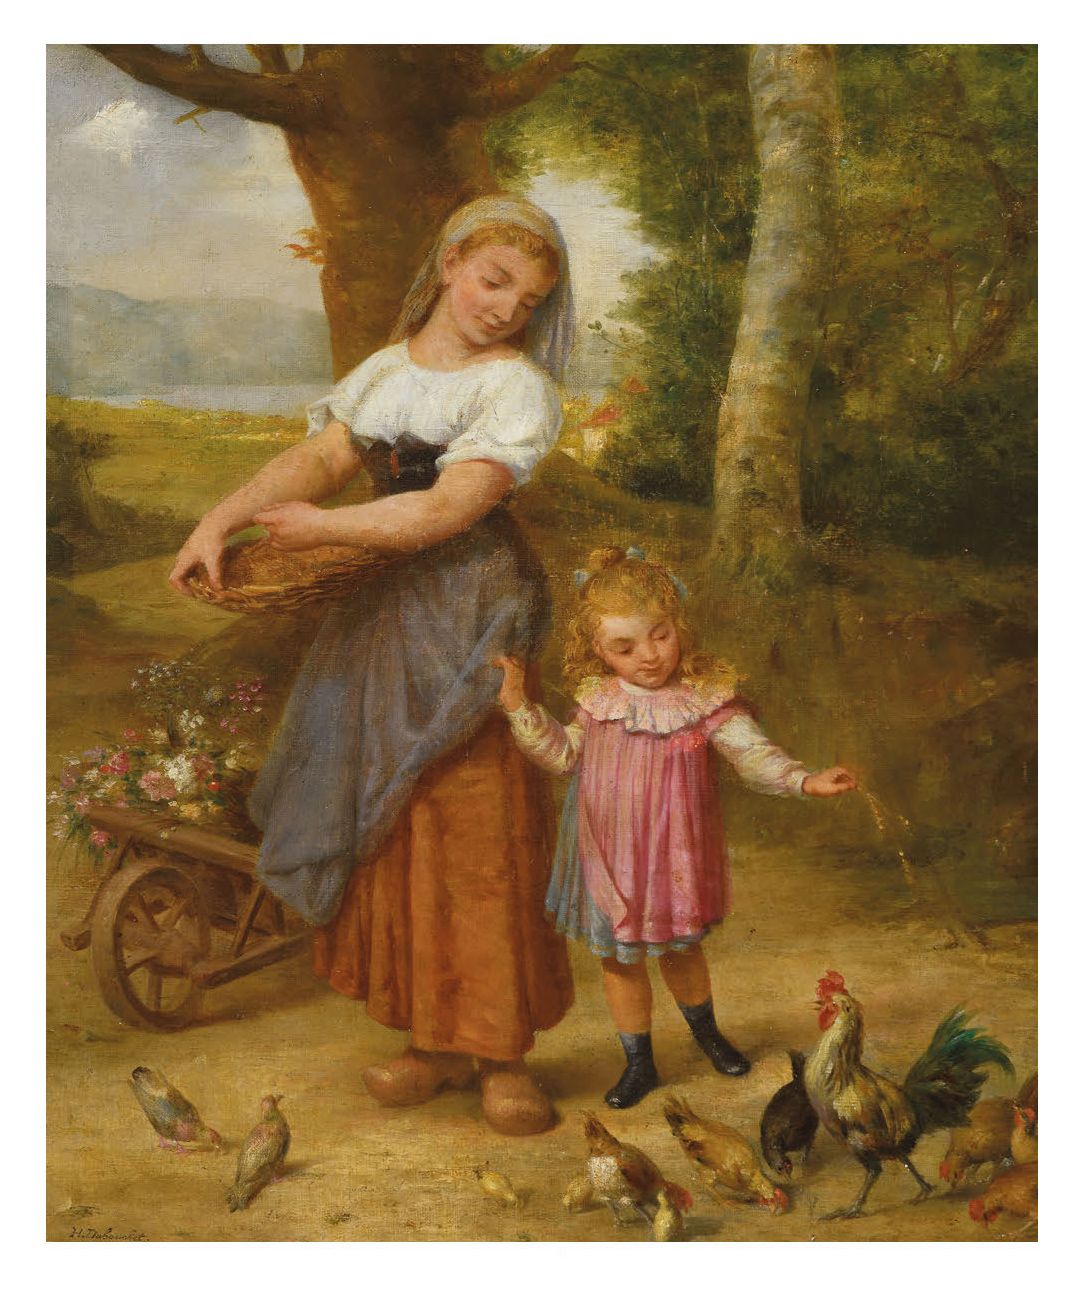 Henri Joseph DUBOUCHET (1833-1909) 母亲和孩子喂鸡
布面油画，左下角签名。
55.5 x 46 cm